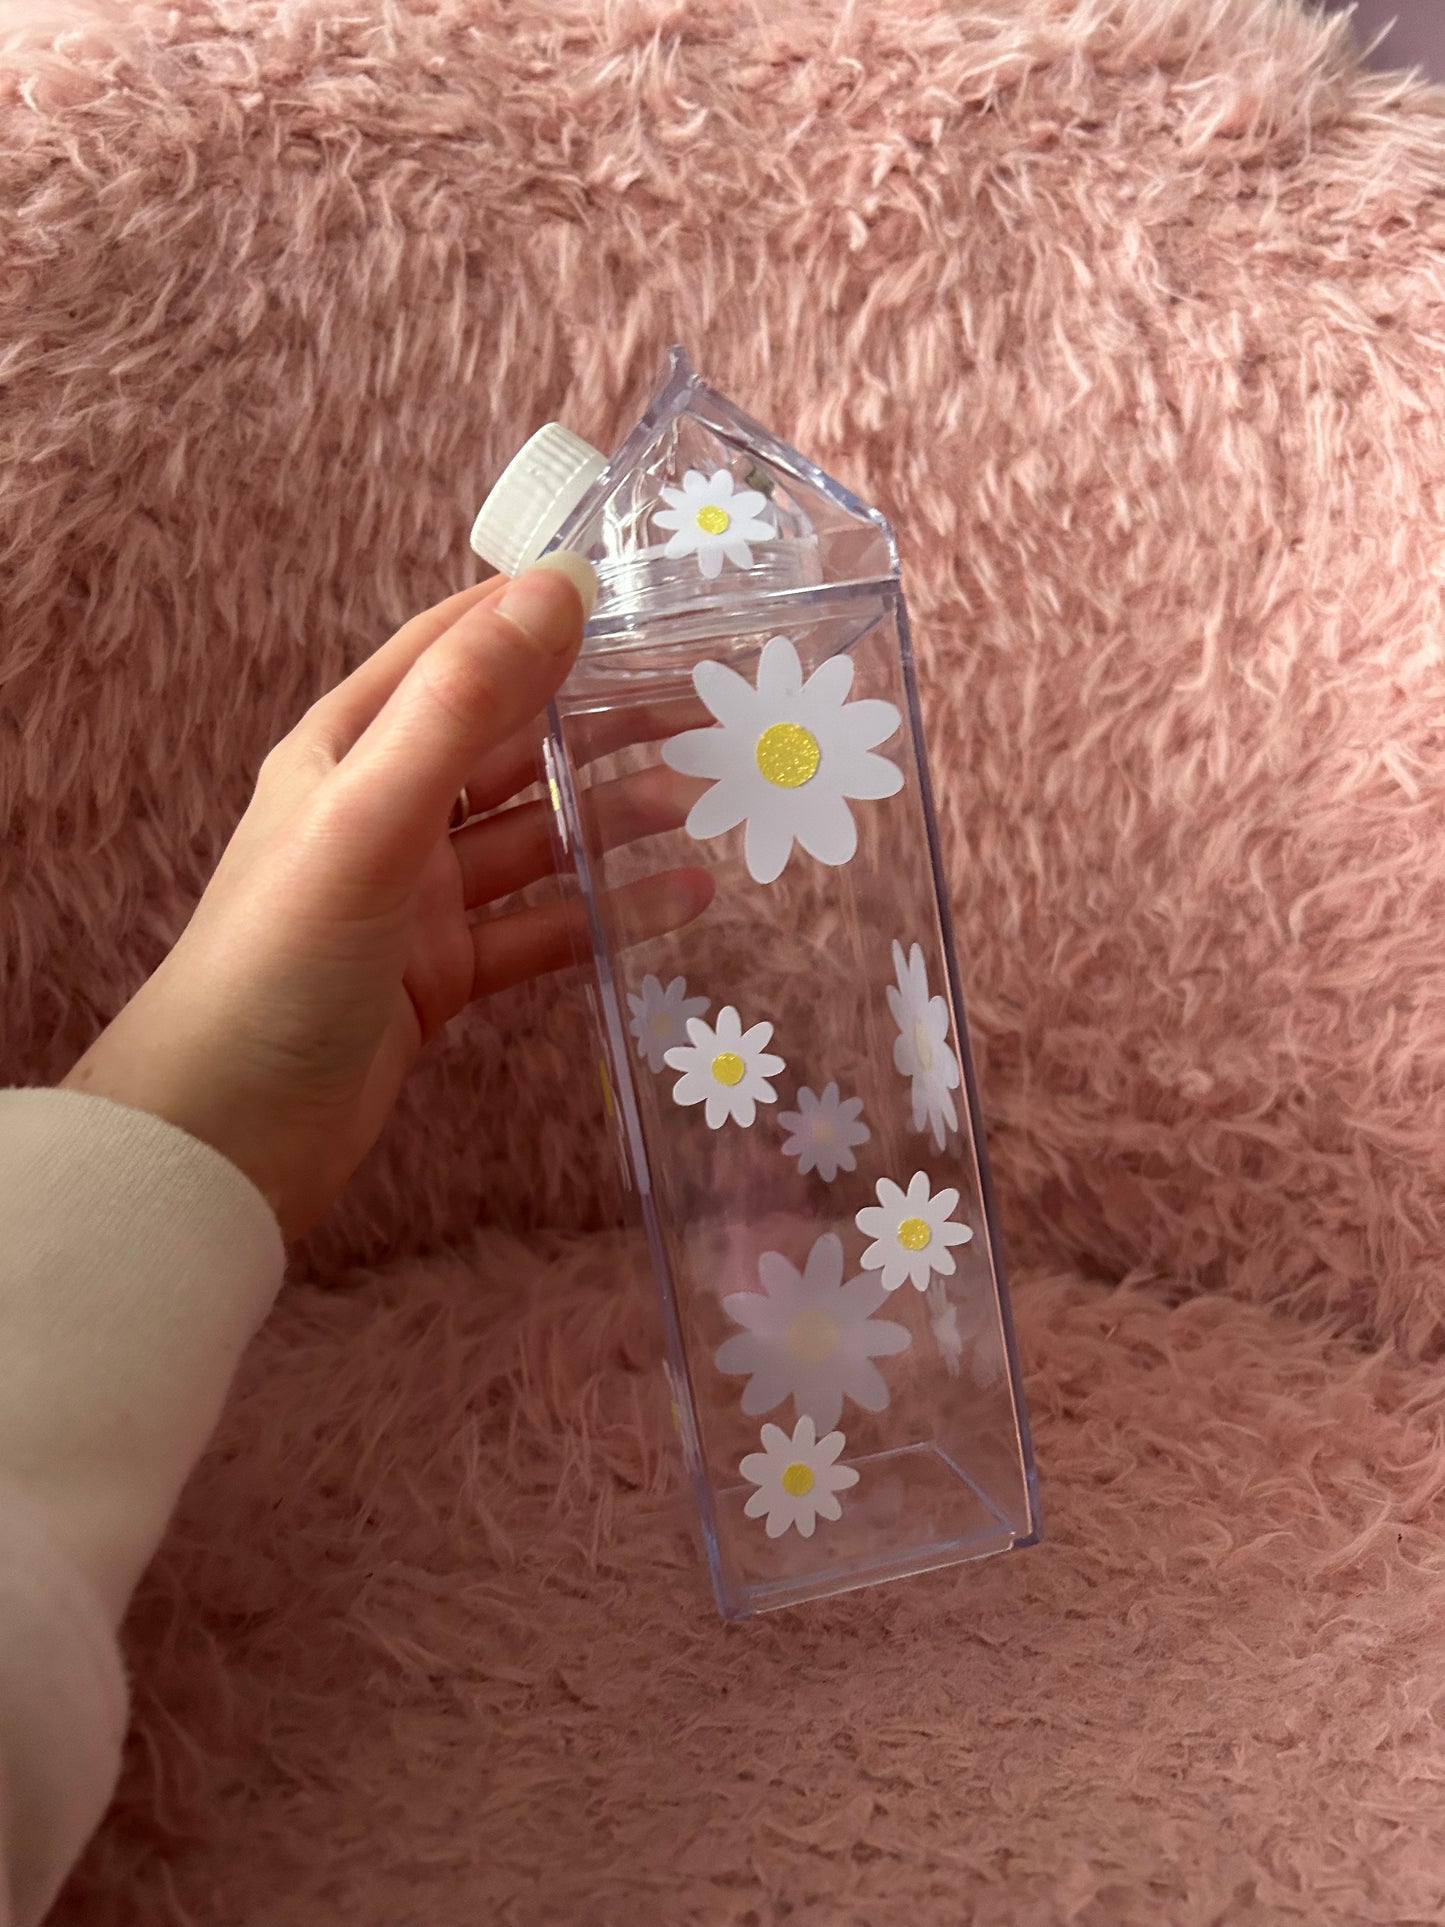 Daisy milk carton 500ml